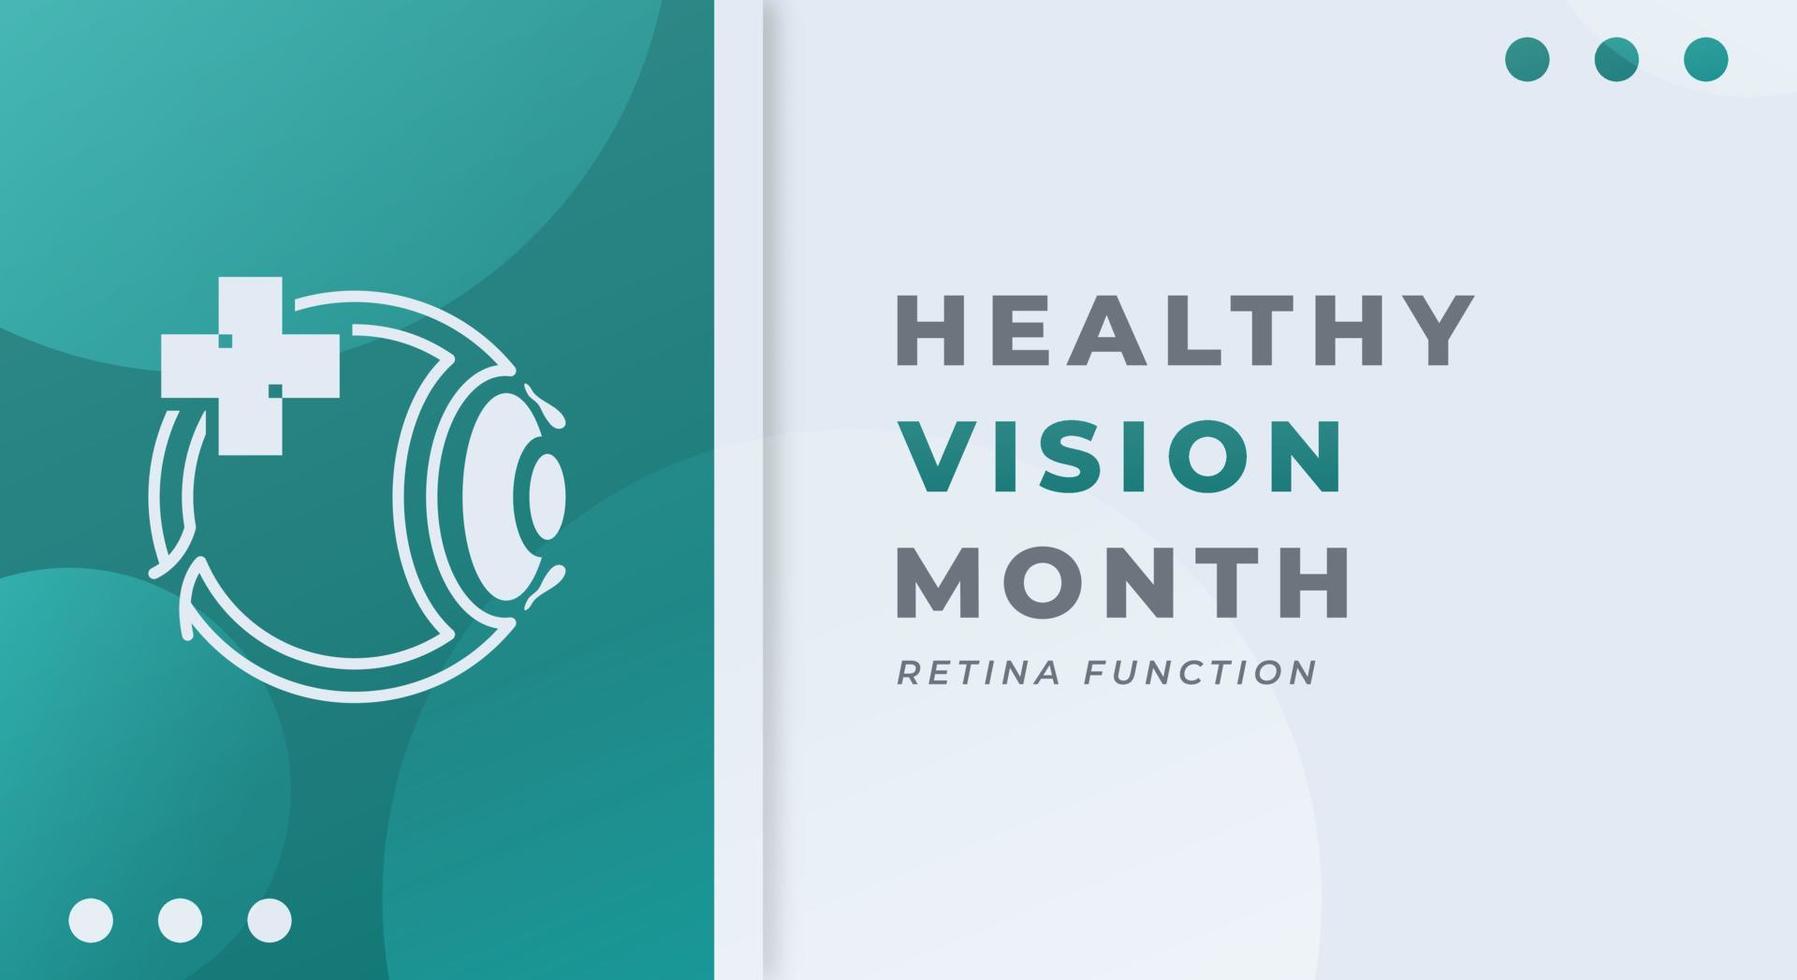 Happy Healthy Vision Month Celebration Vector Design Illustration for Background, Poster, Banner, Advertising, Greeting Card